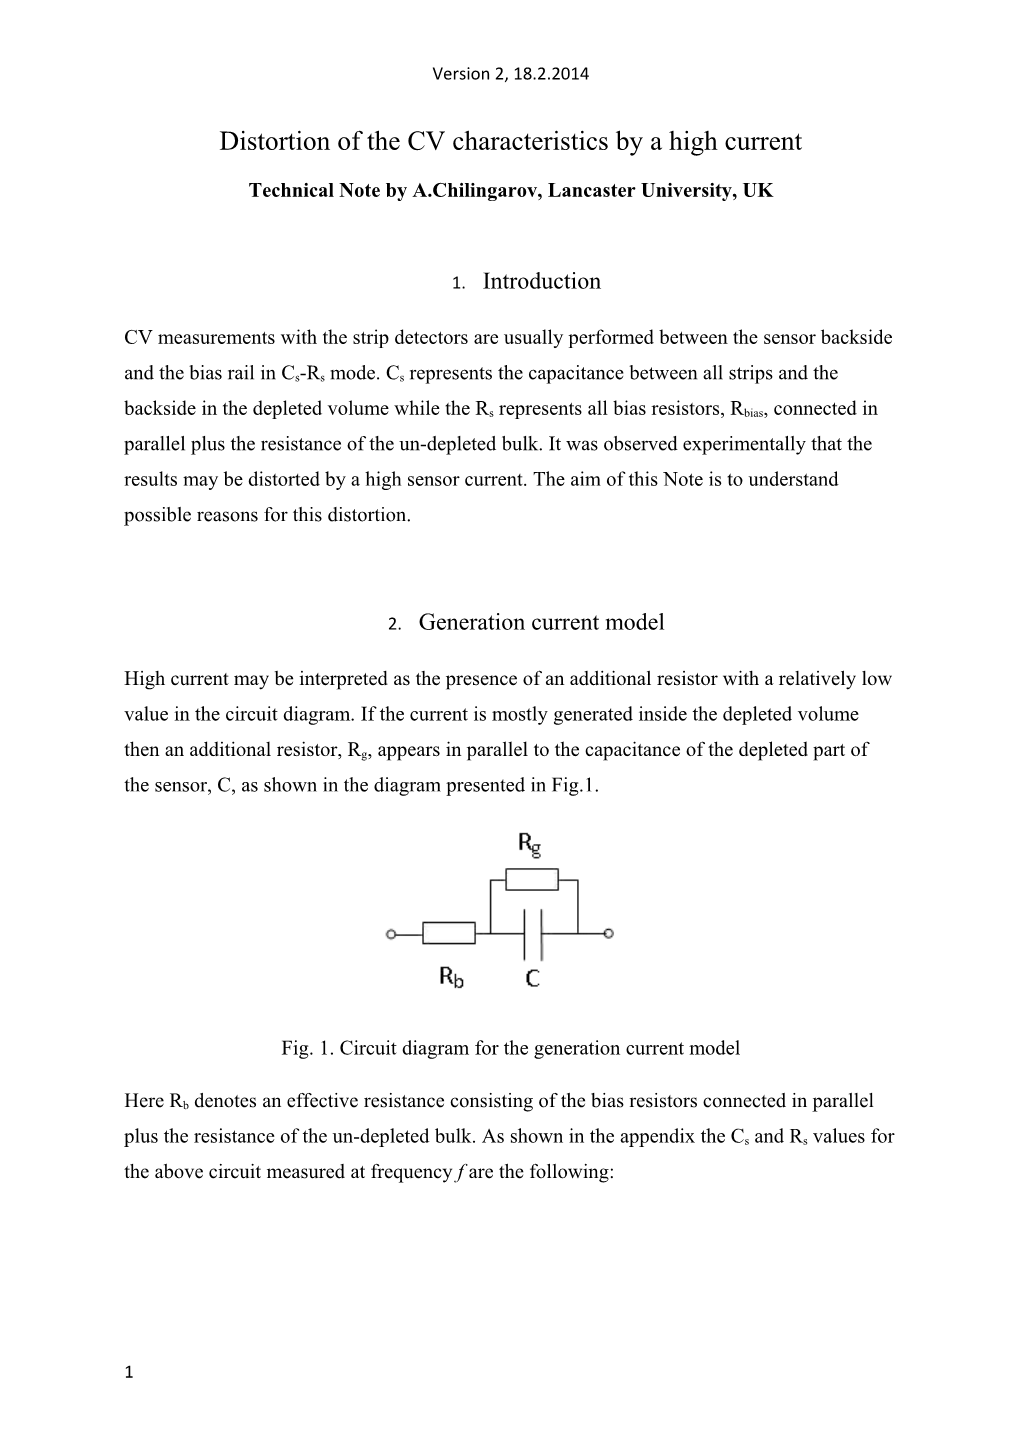 Technical Note by A.Chilingarov, Lancaster University, UK